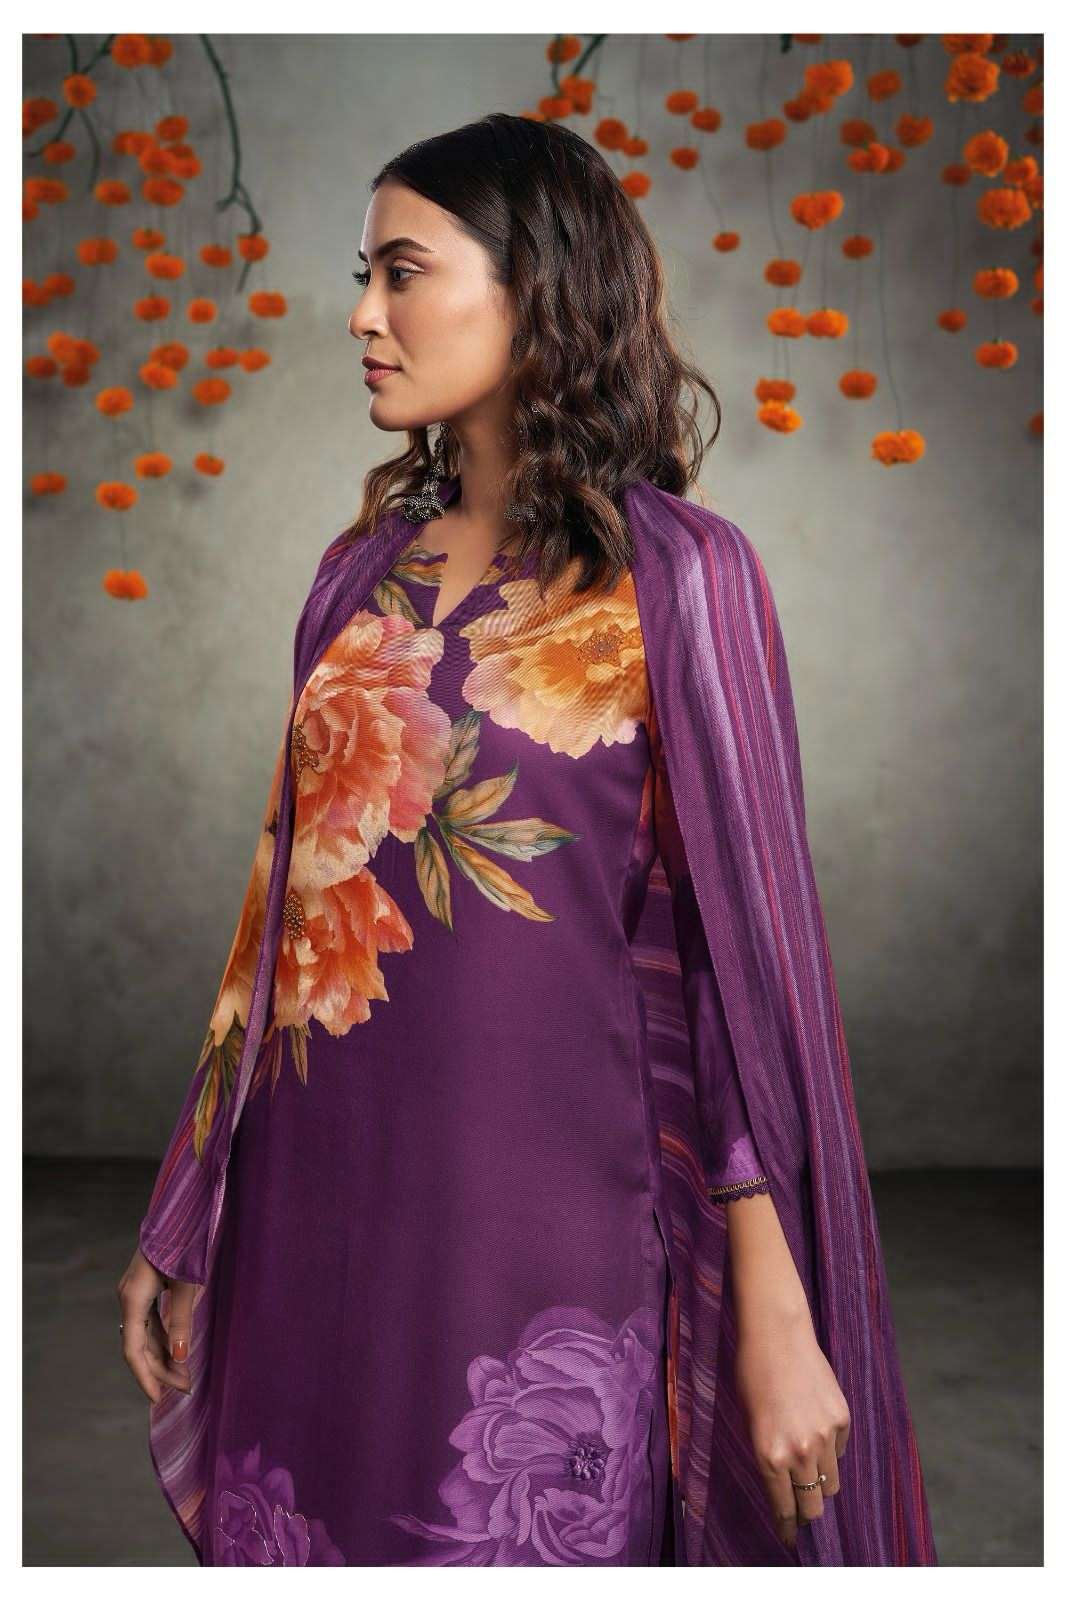 ganga sadhya 2036 colour series latest designer salwar kameez wholesaler surat gujarat